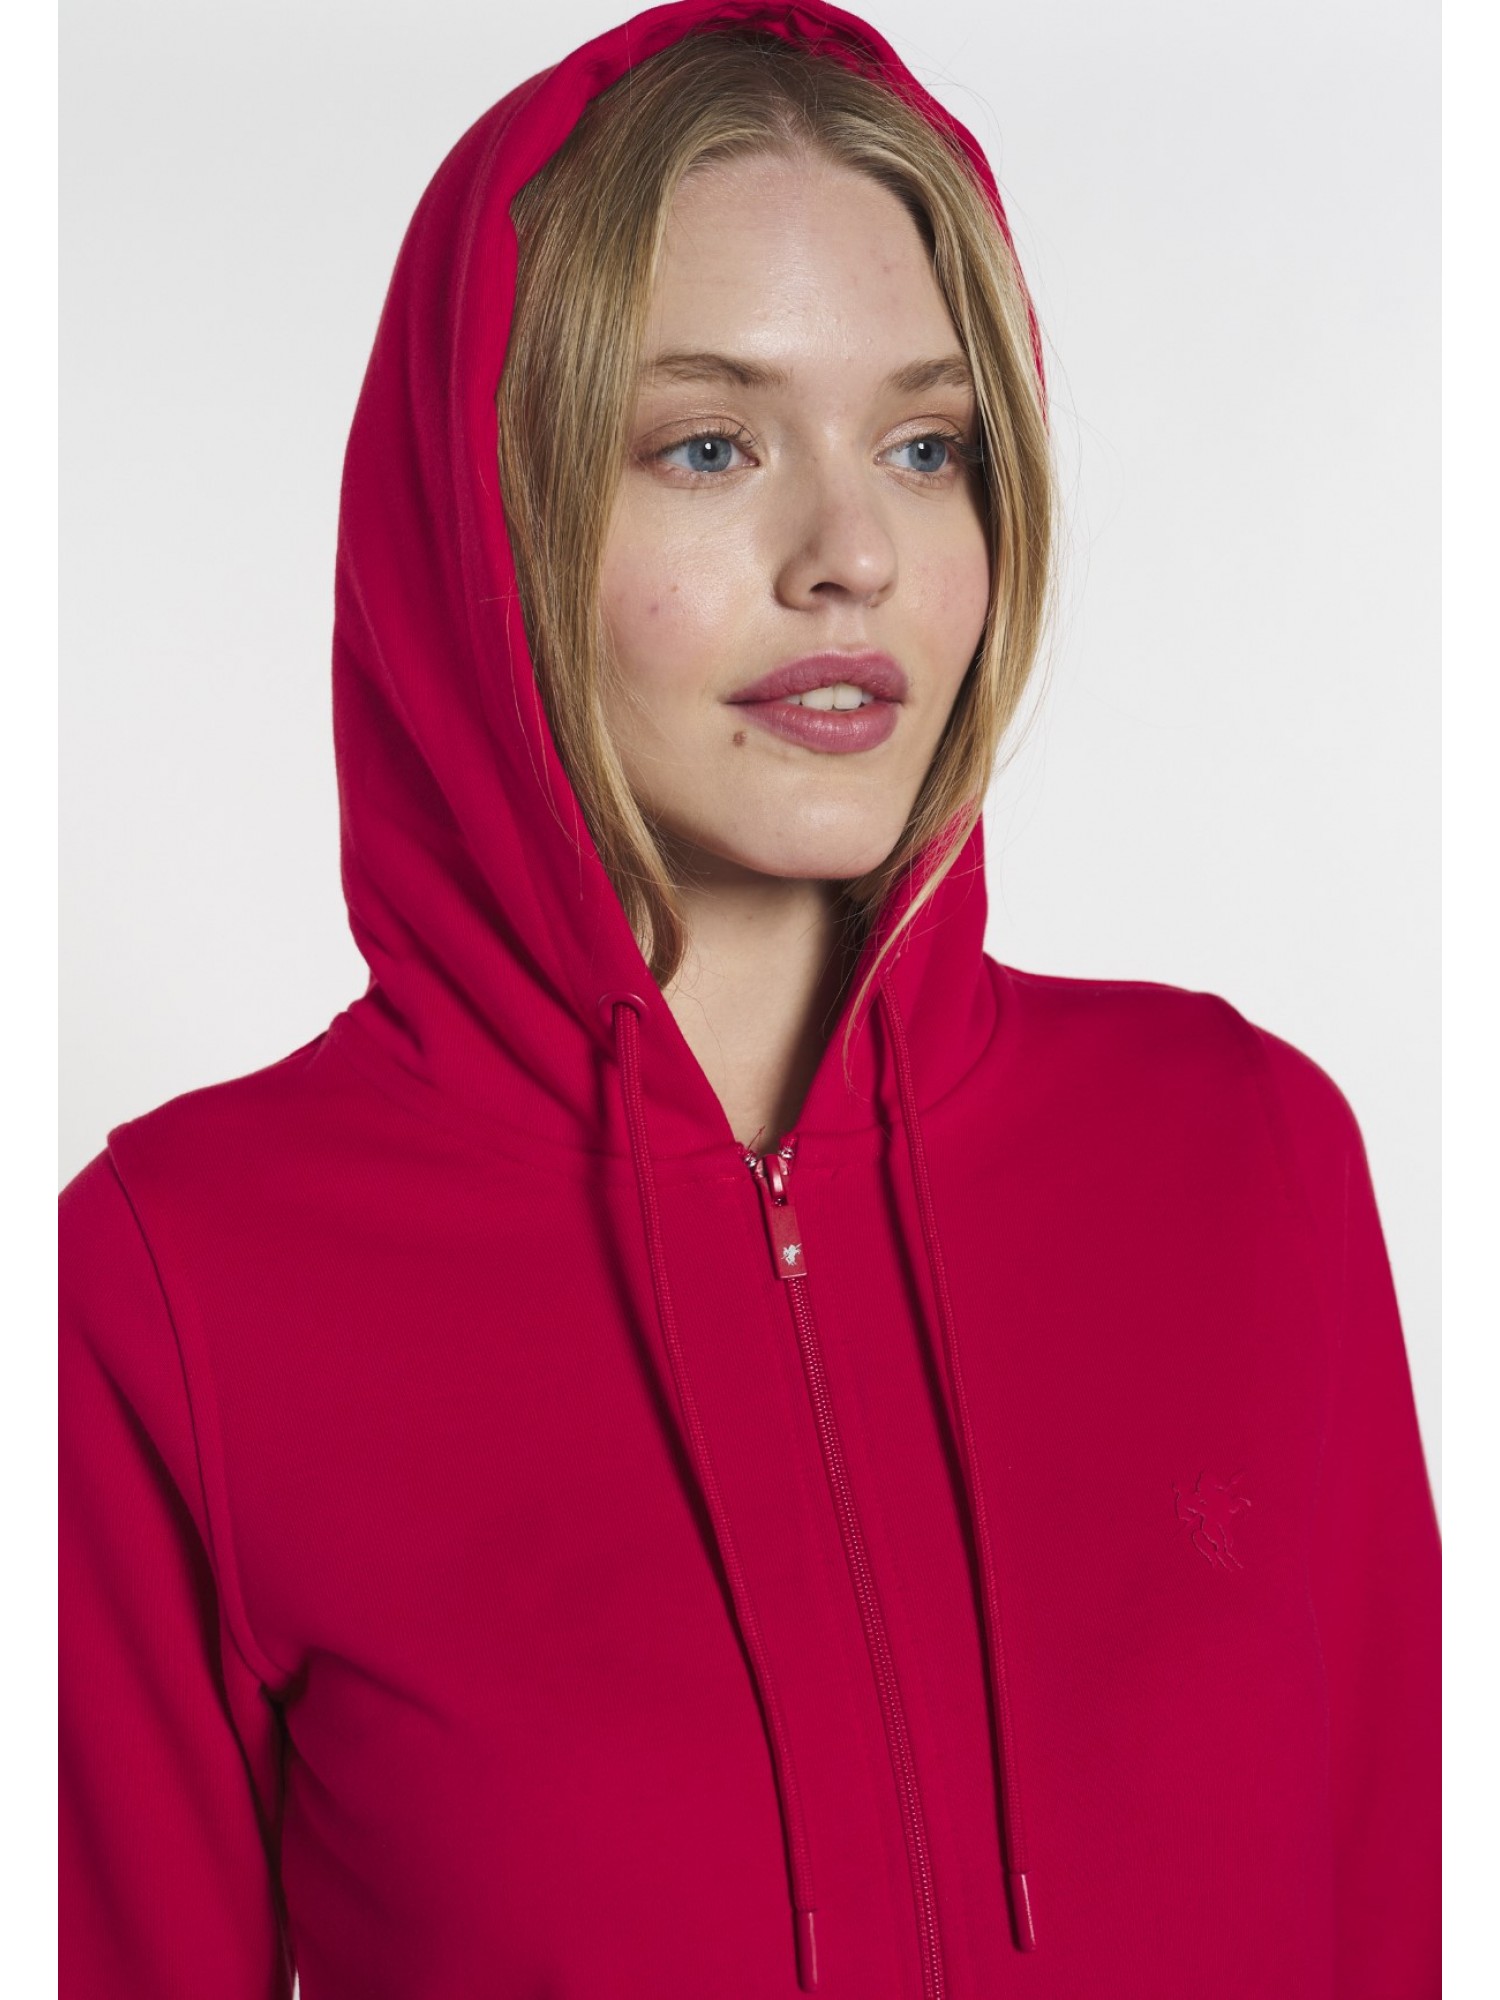 Women Long Sleeve Sweatshirt Rot B1100006R